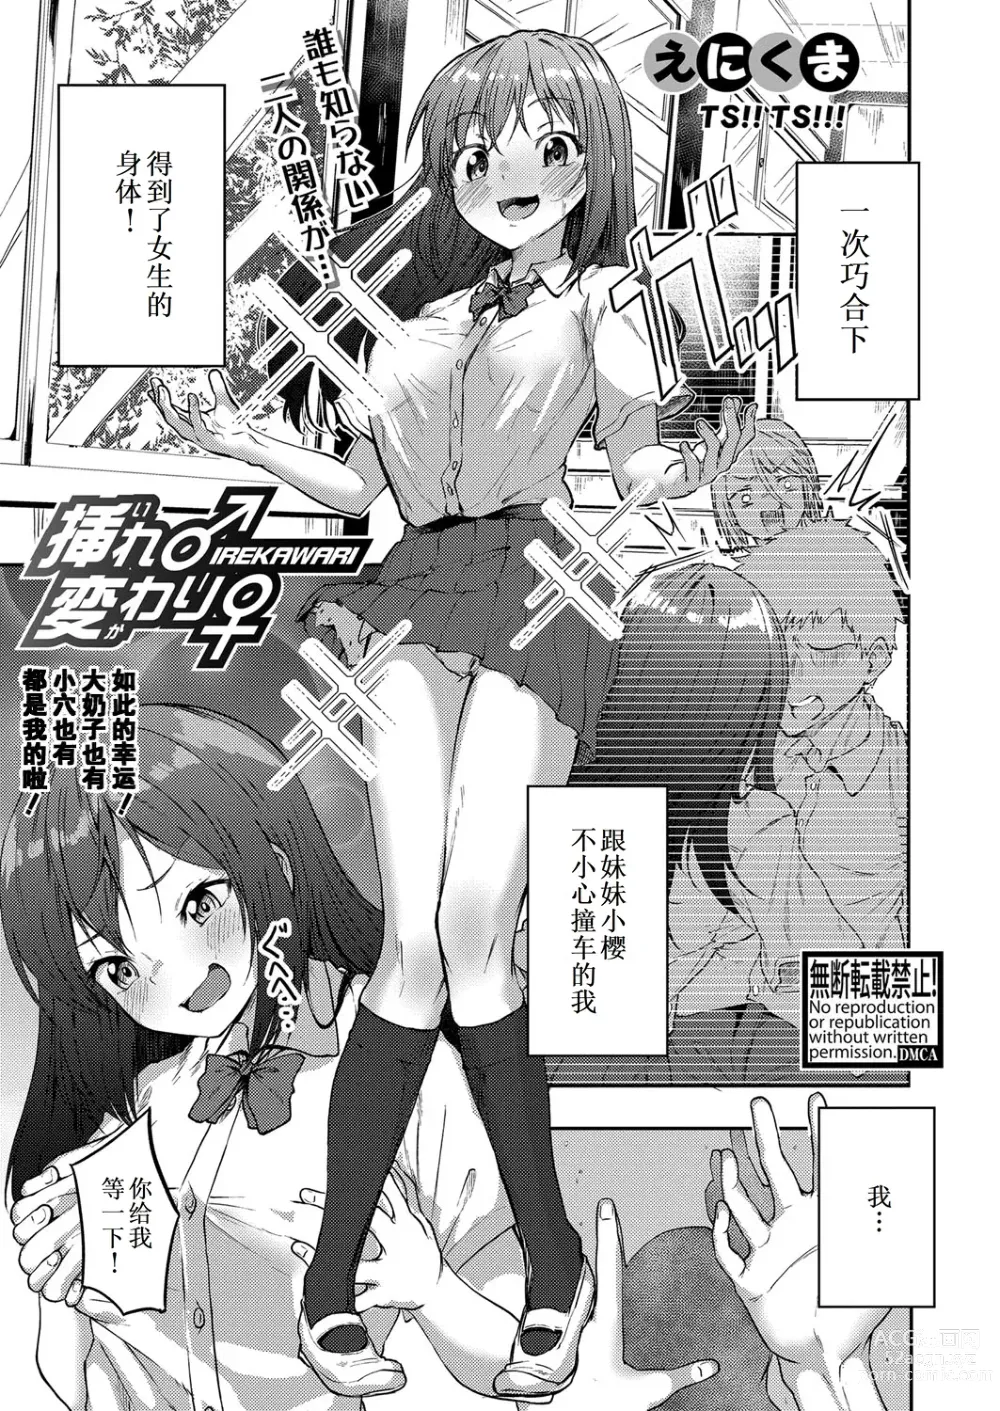 Page 1 of manga IREKAWARI